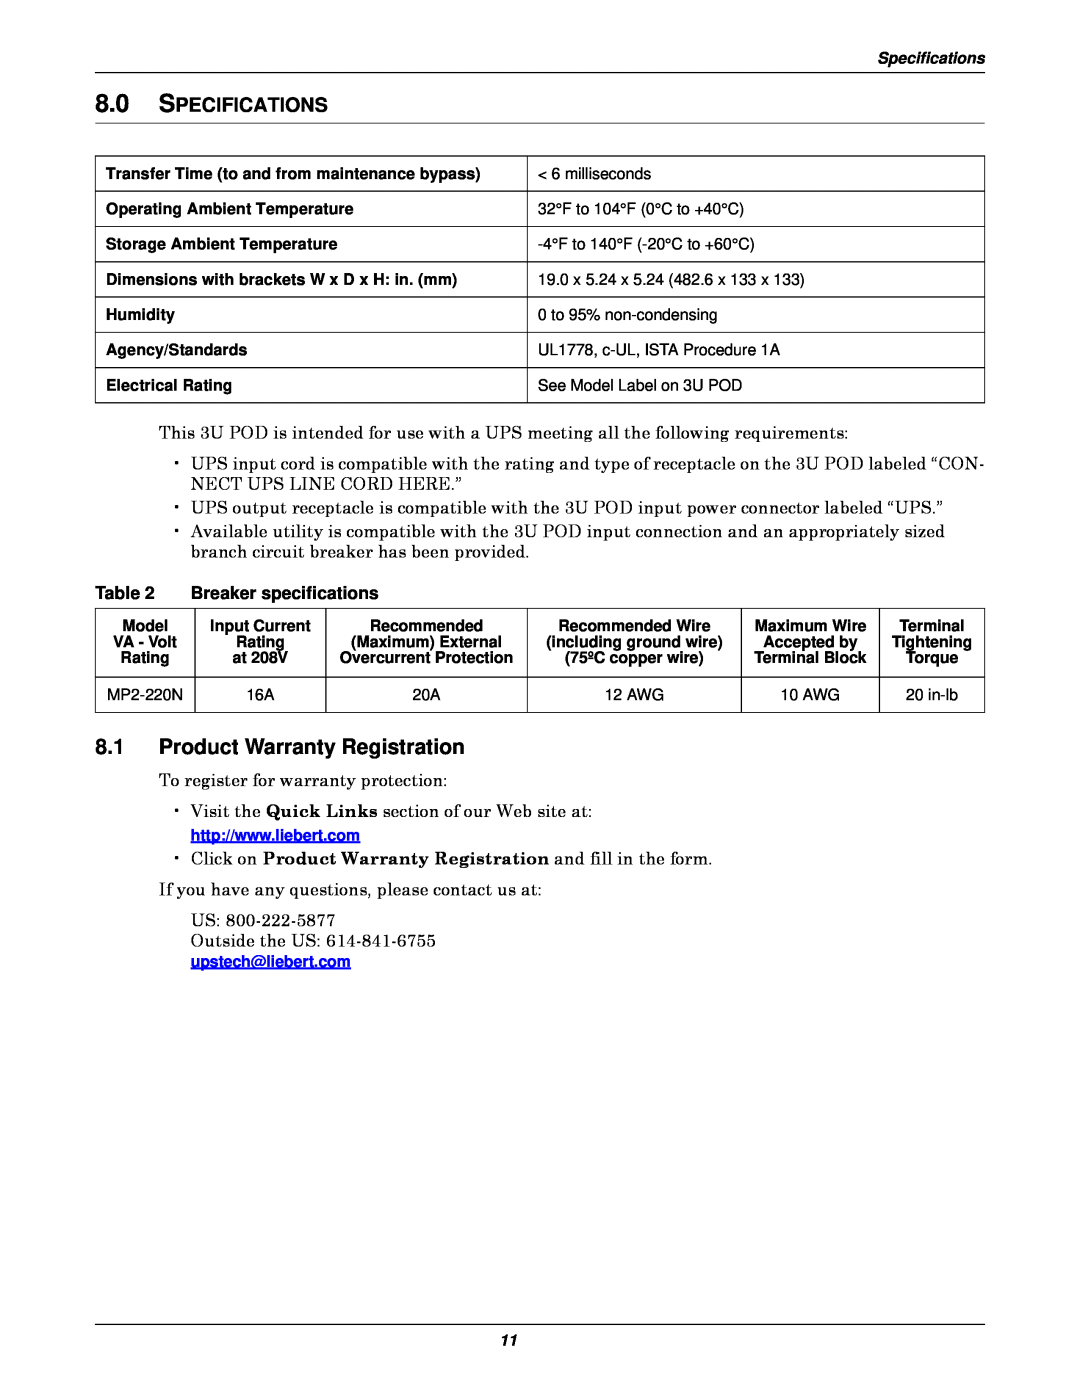 Emerson 3U MP2-220N user manual Product Warranty Registration, Specifications, Breaker specifications 